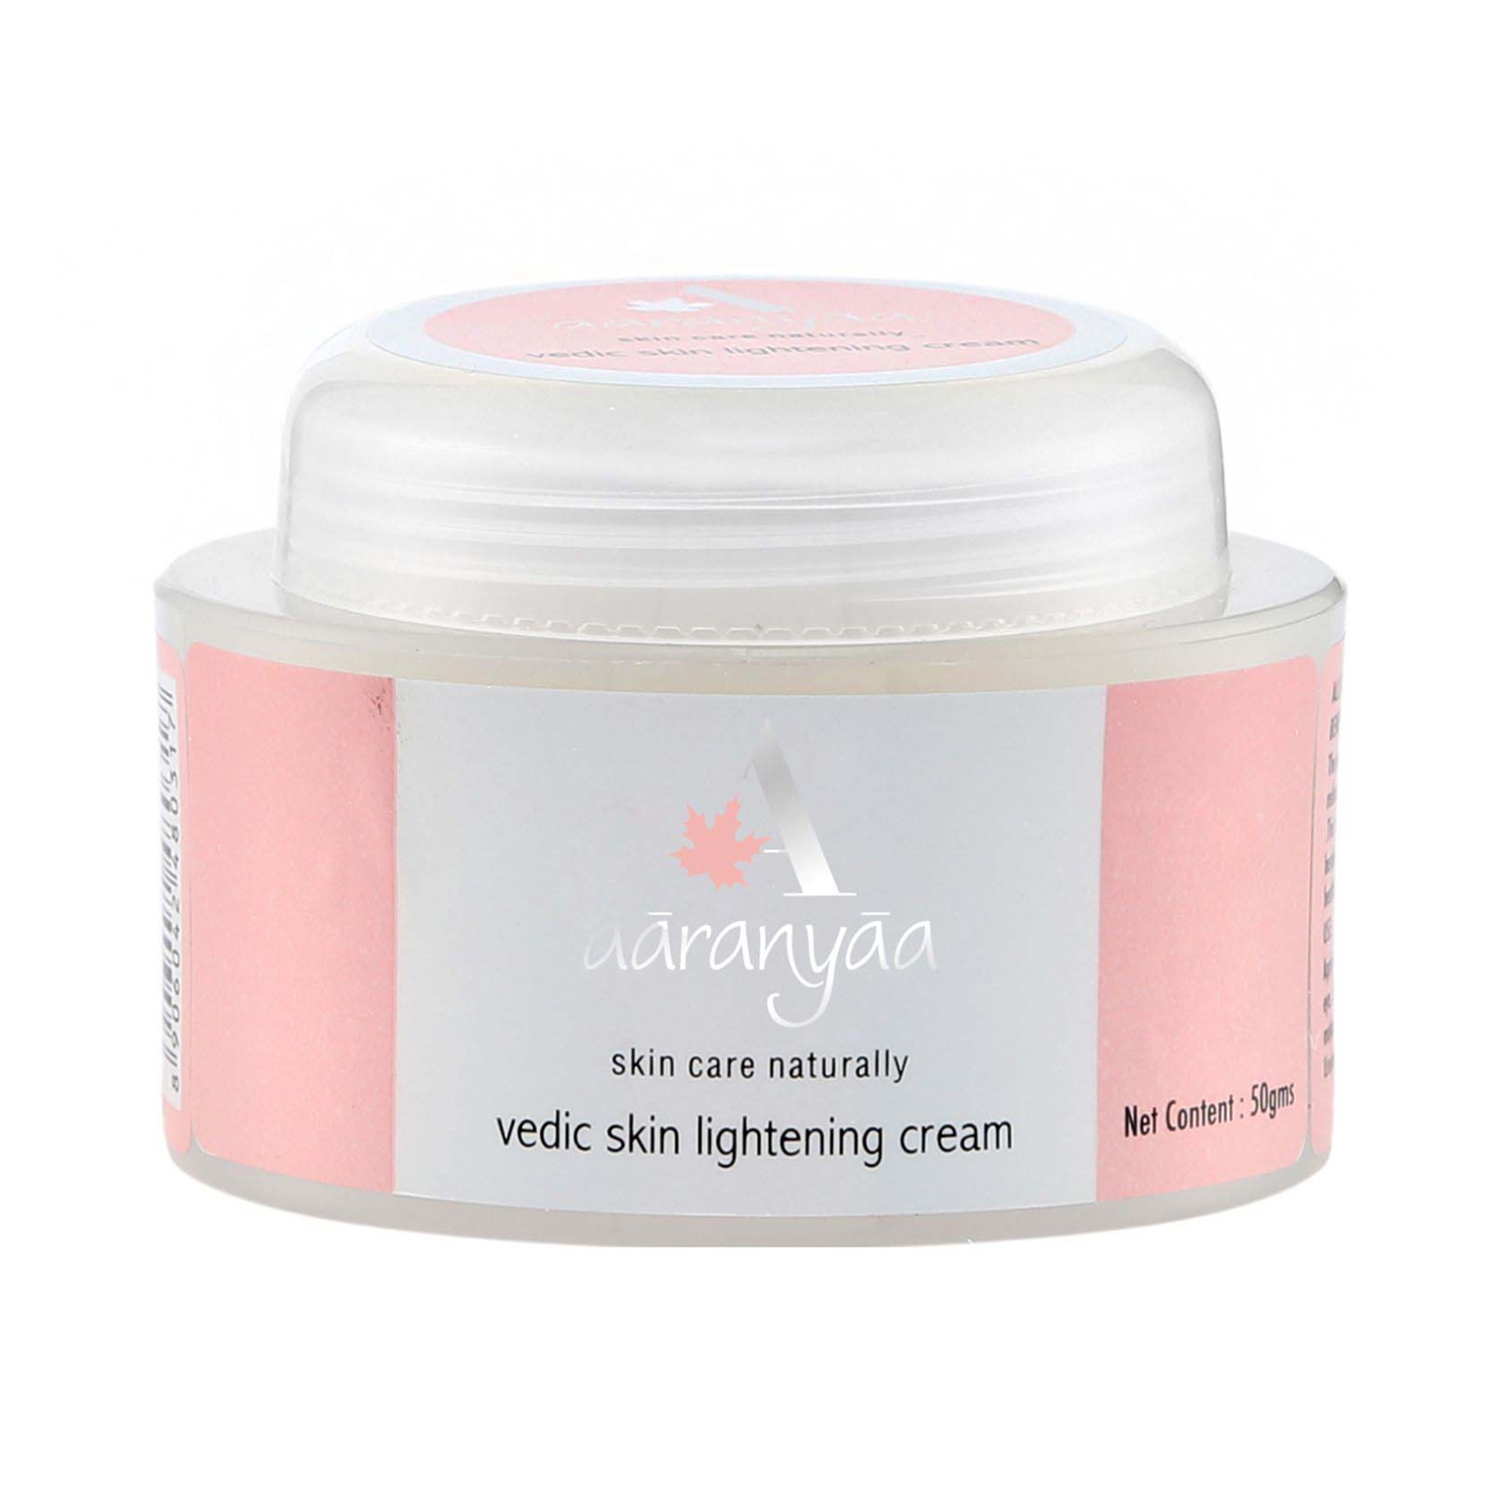 Aaranyaa Vedic Skin Lightening Cream (50g)